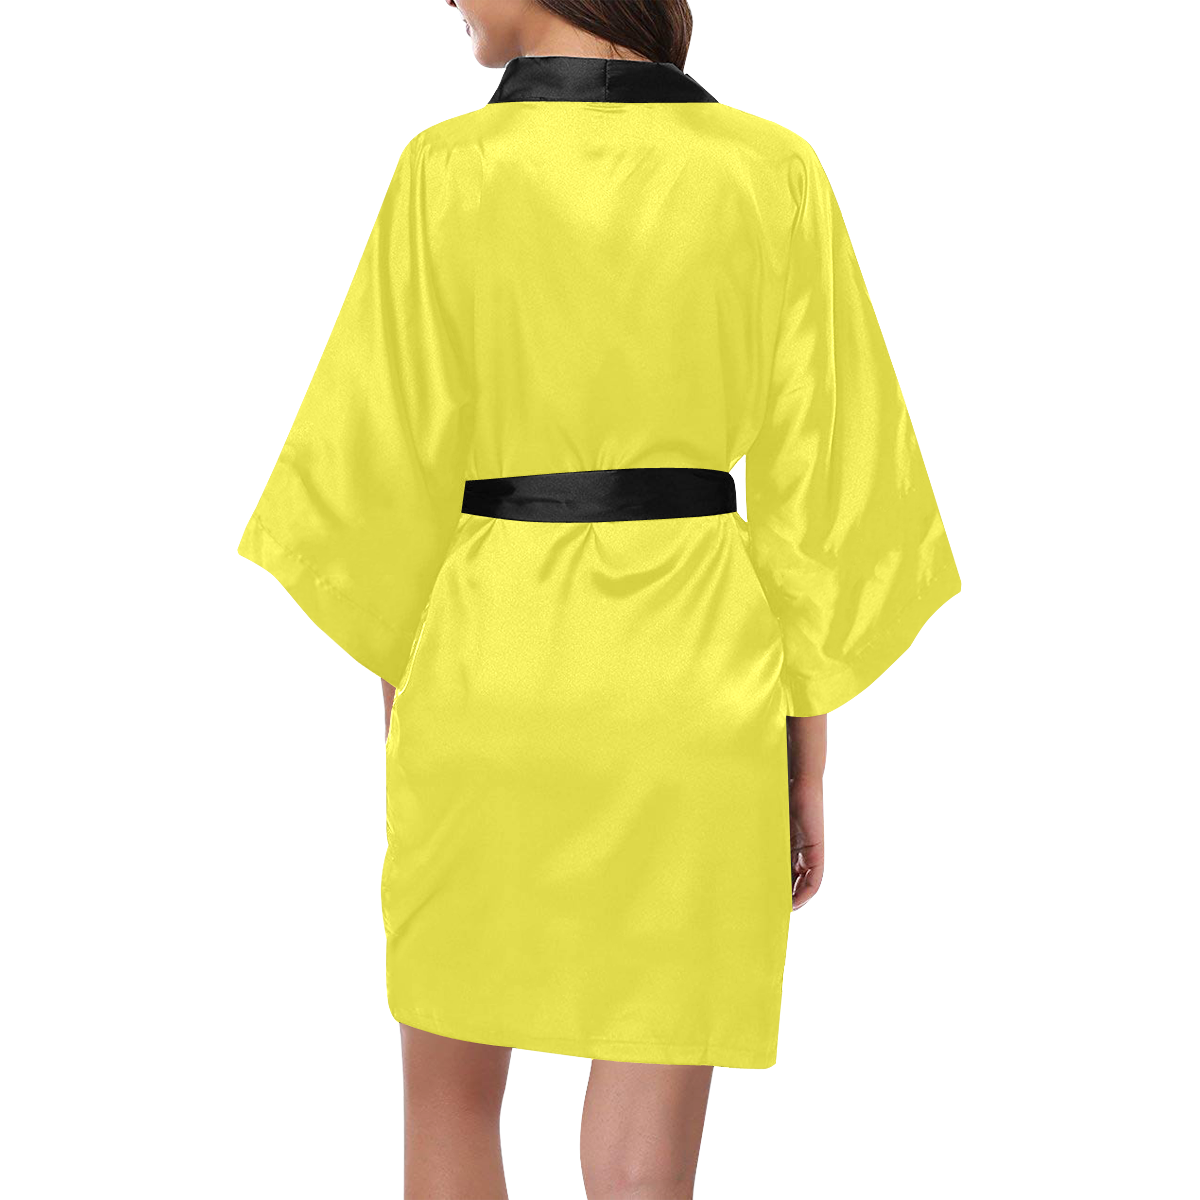 Yummy Lily Yellow Solid Color Kimono Robe